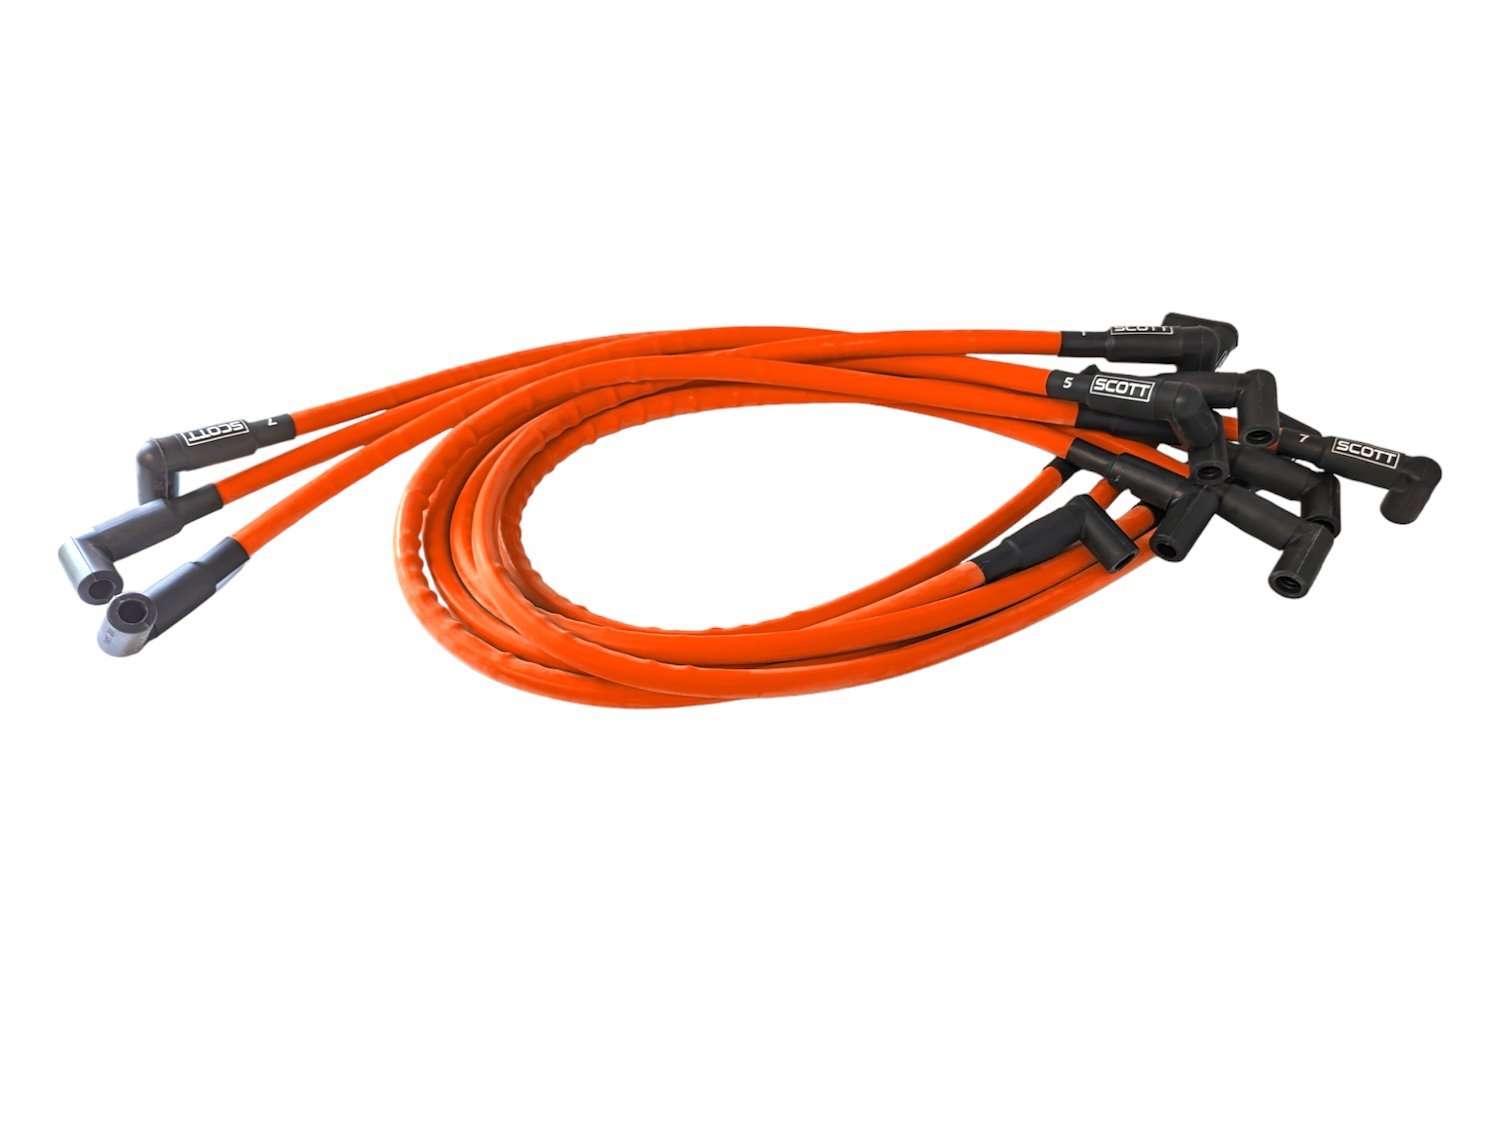 SPW-CH-416-9 High-Performance Silicone-Sleeved Spark Plug Wire Set for Big Block Chevy, Under Header [Fluorescent Orange]